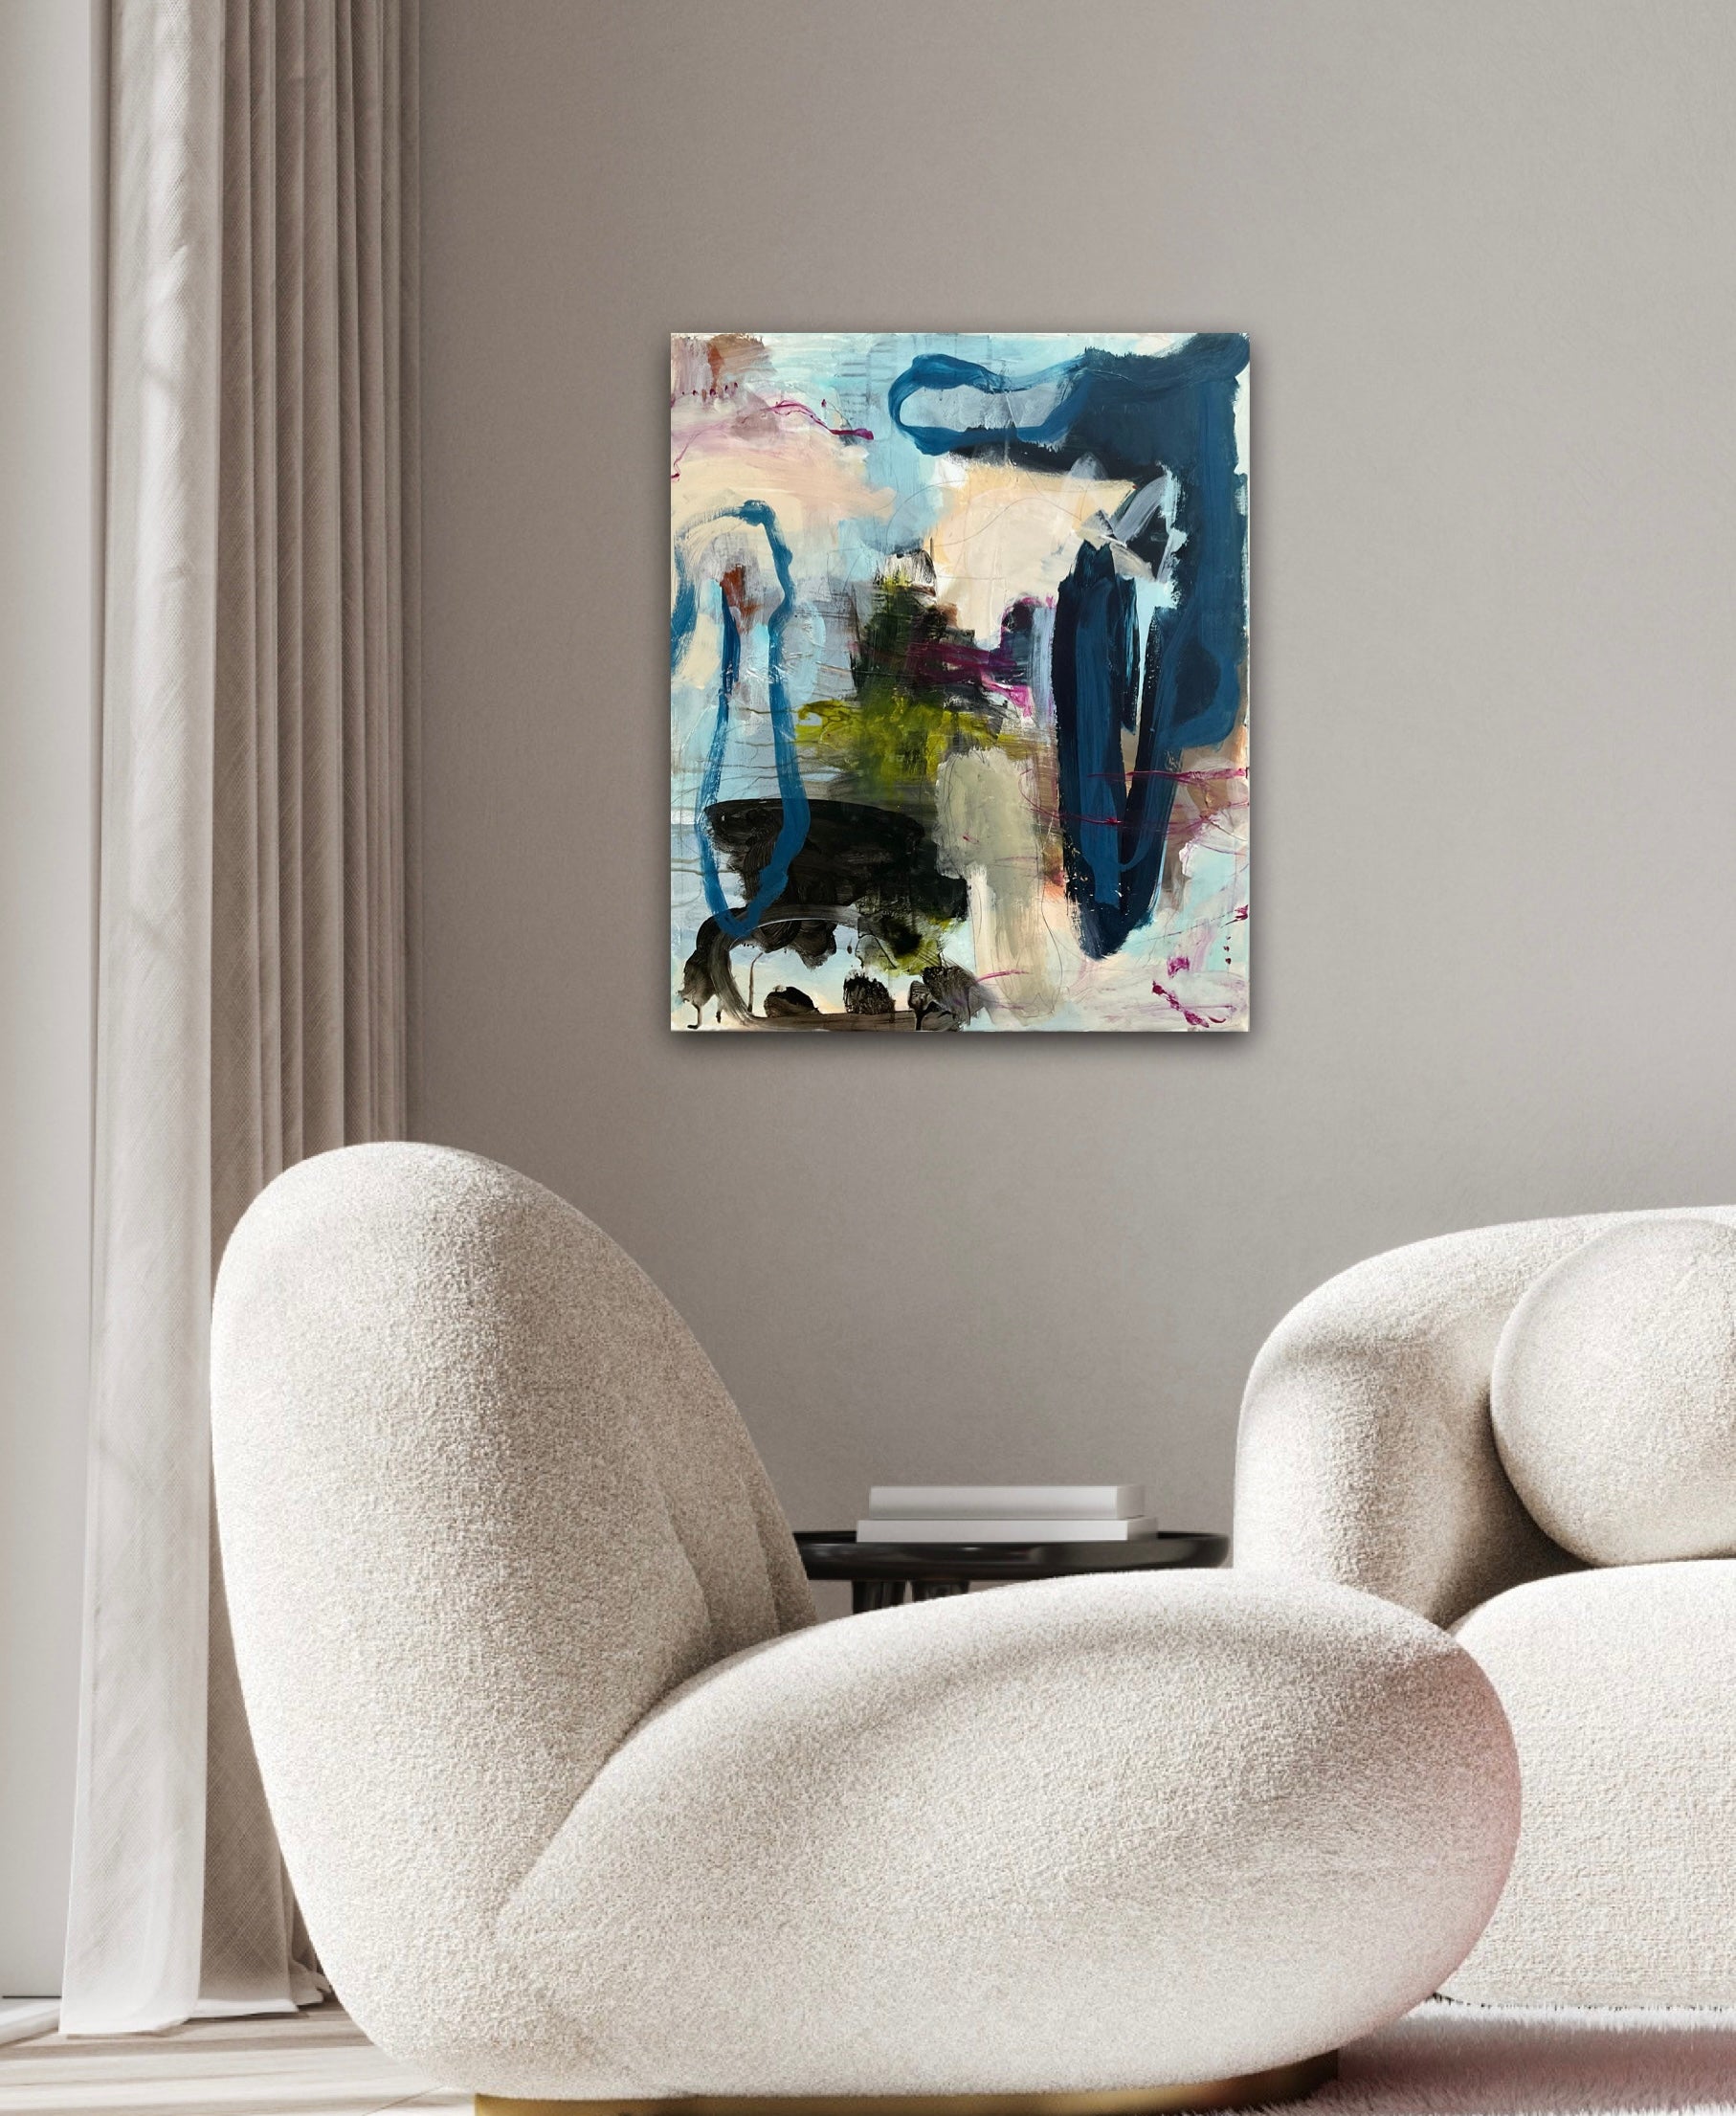 Abstrakt maleri, 50x60 cm, "Touch the sky" by Lone Reedtz , Abstrakt ekspressivt akrylmaleri på lærred